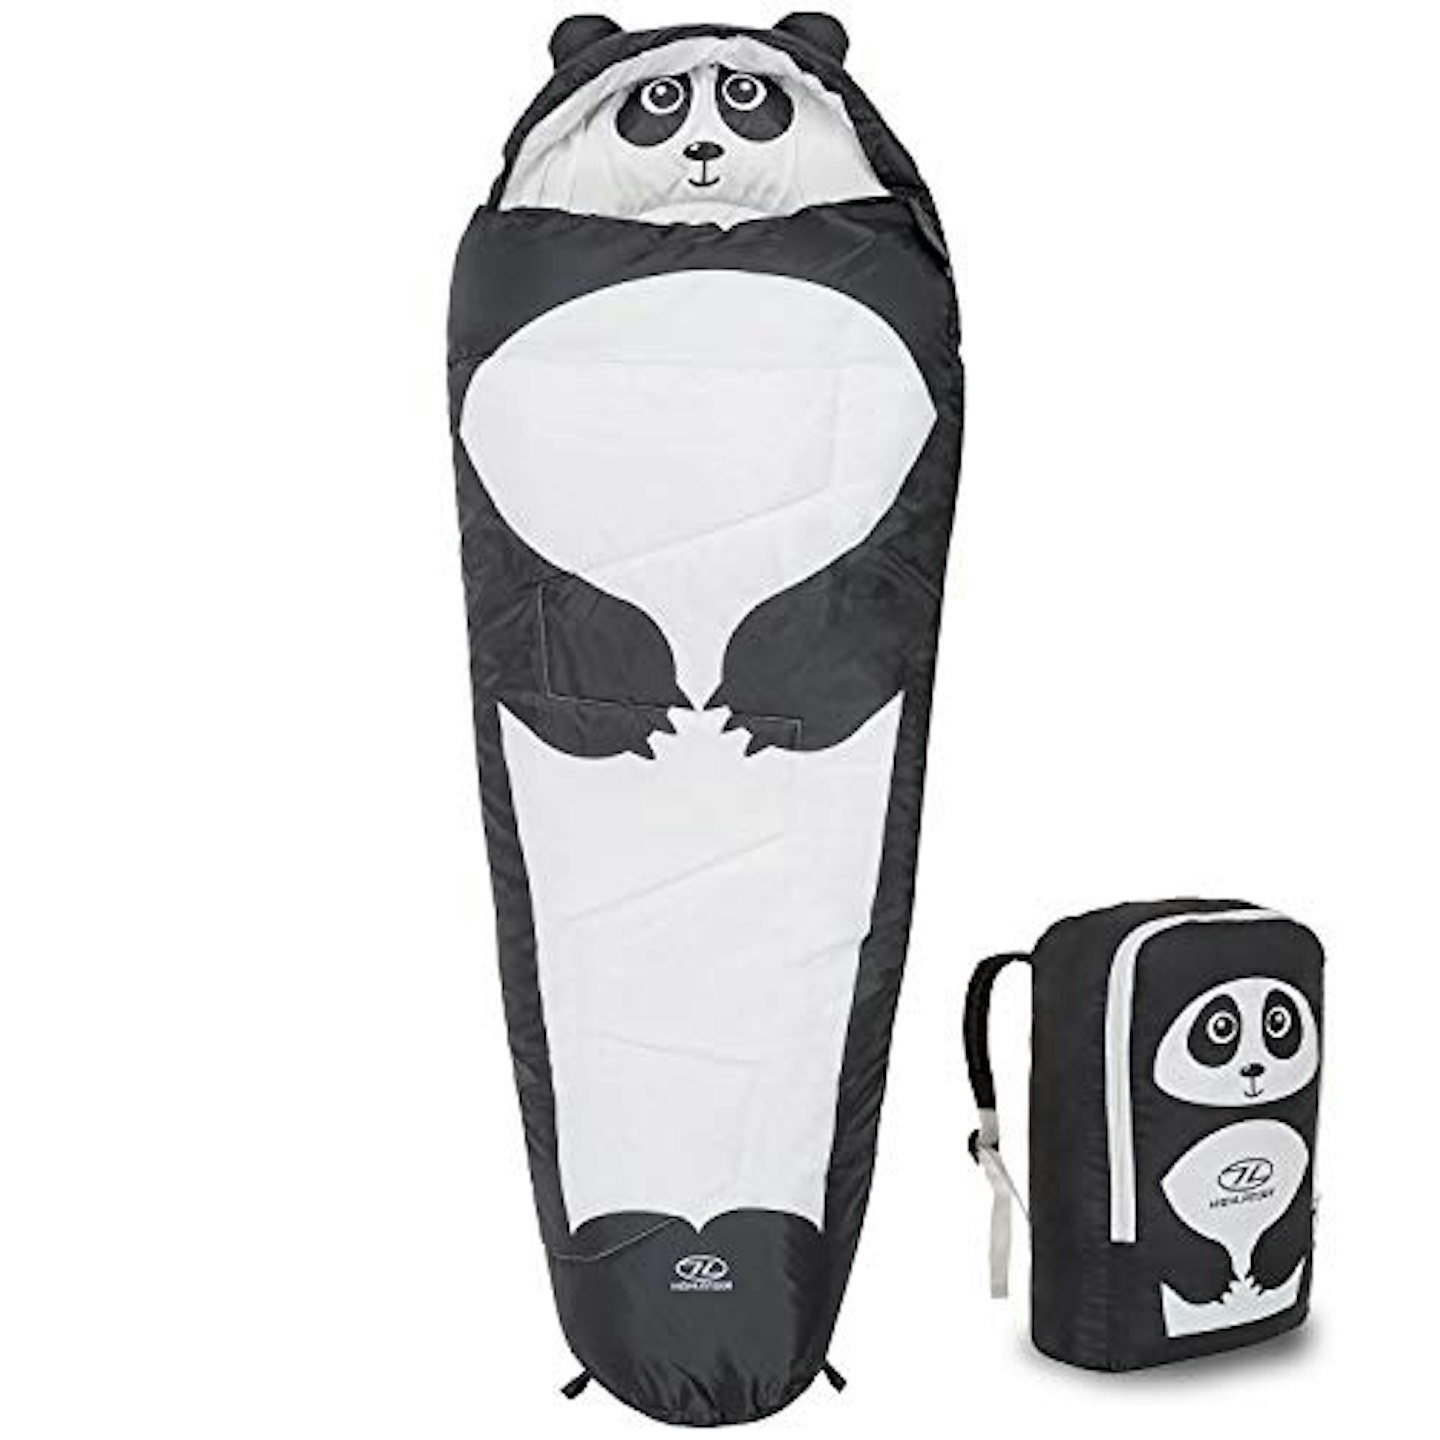 Highlander Unisexu0026#039;s Creature Sleeping Bag, Panda